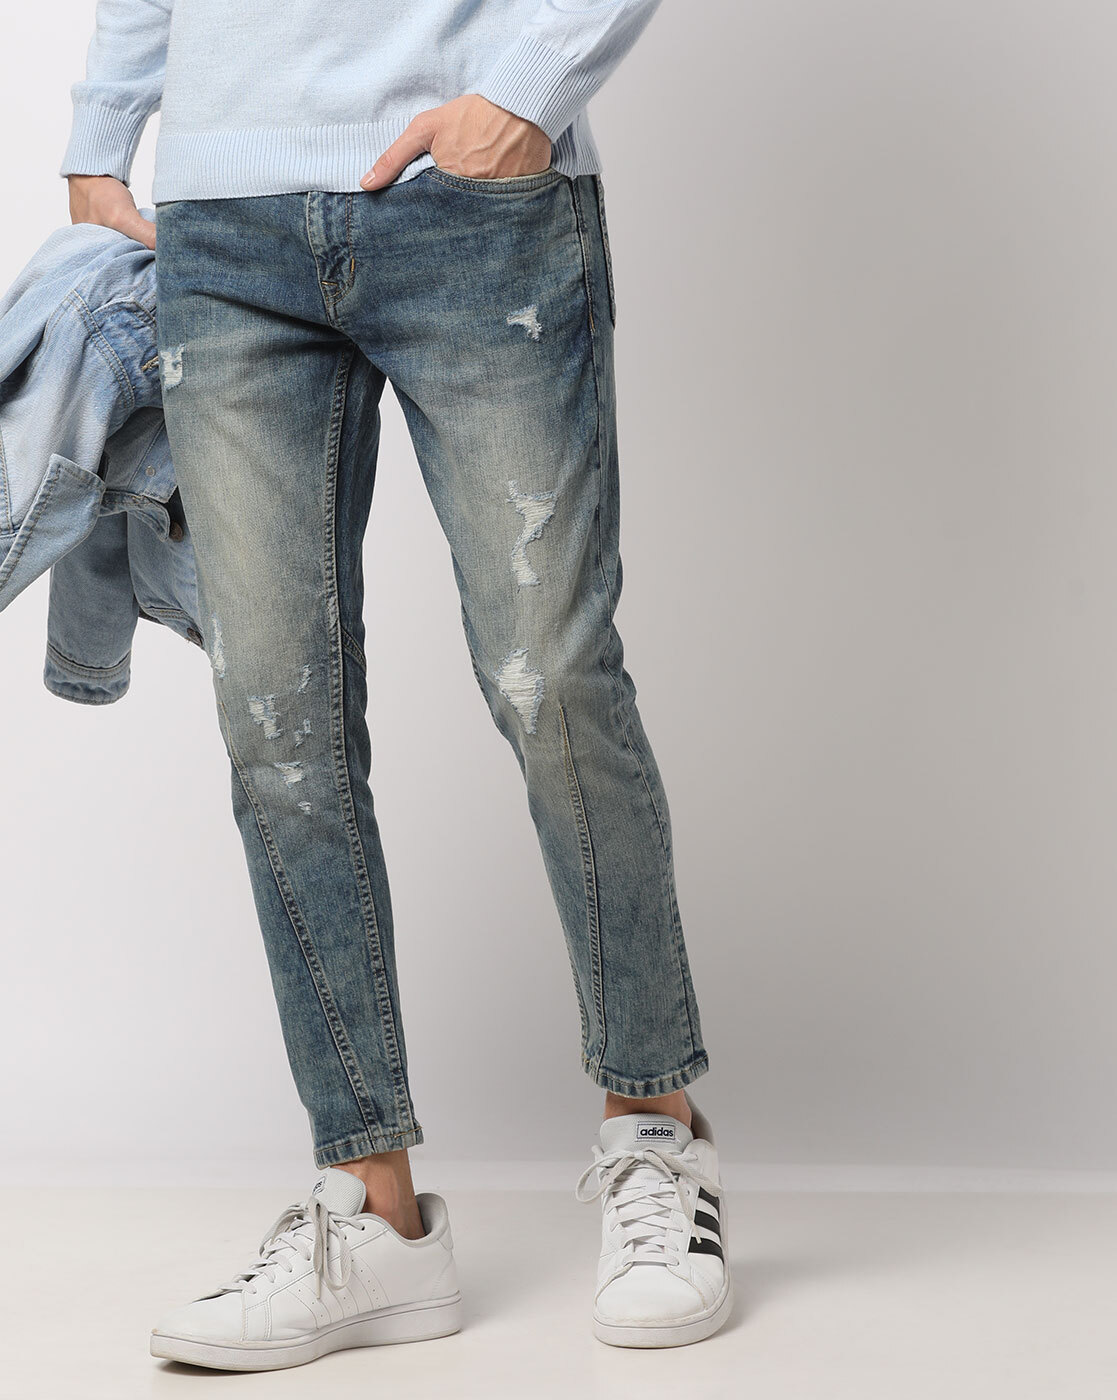 Buy Blue Jeans for Men LEE Online | Ajio.com